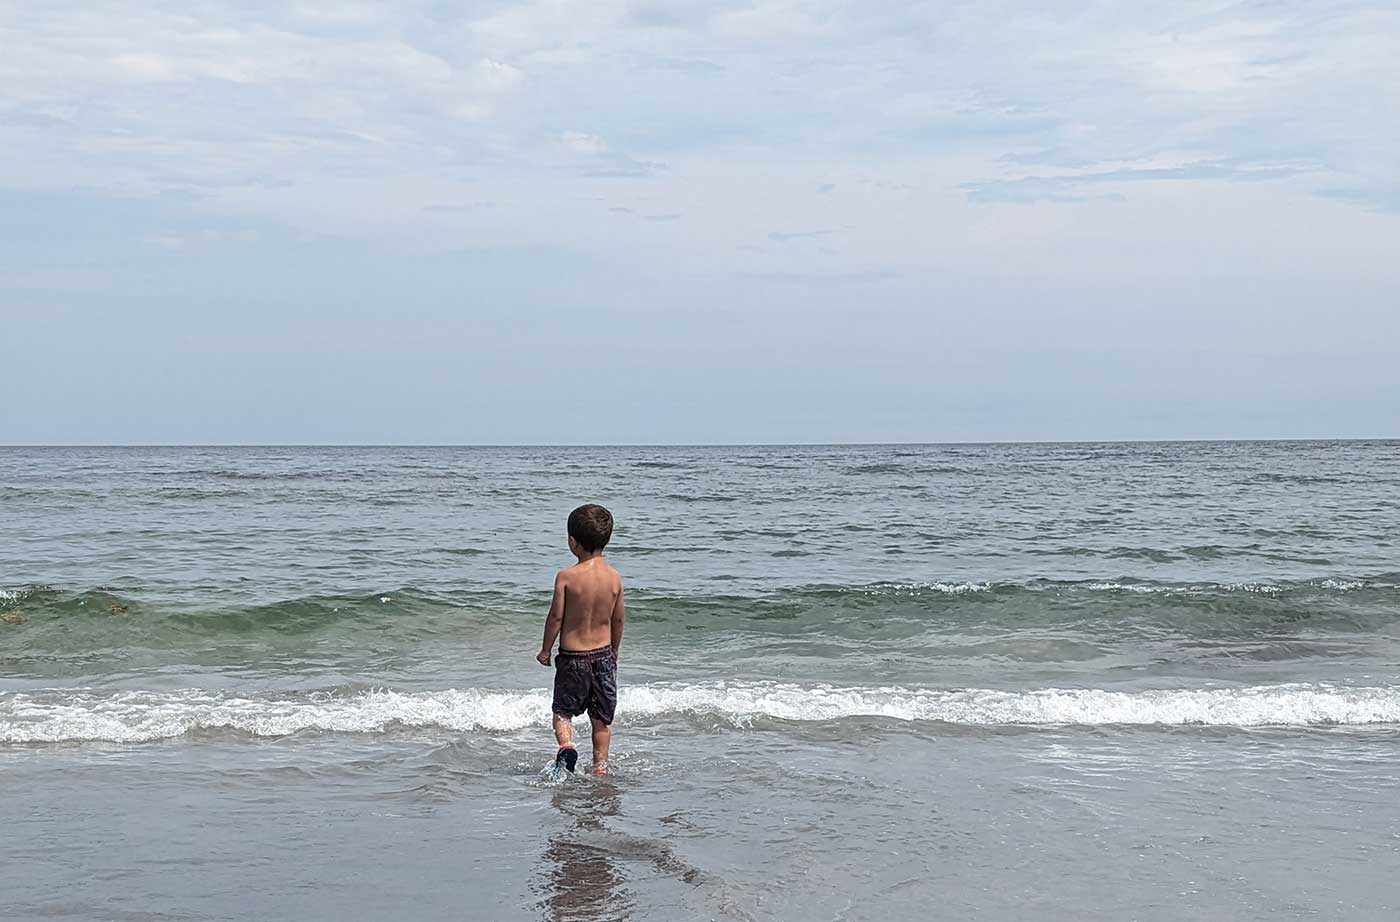 Young boy watching ocean waves